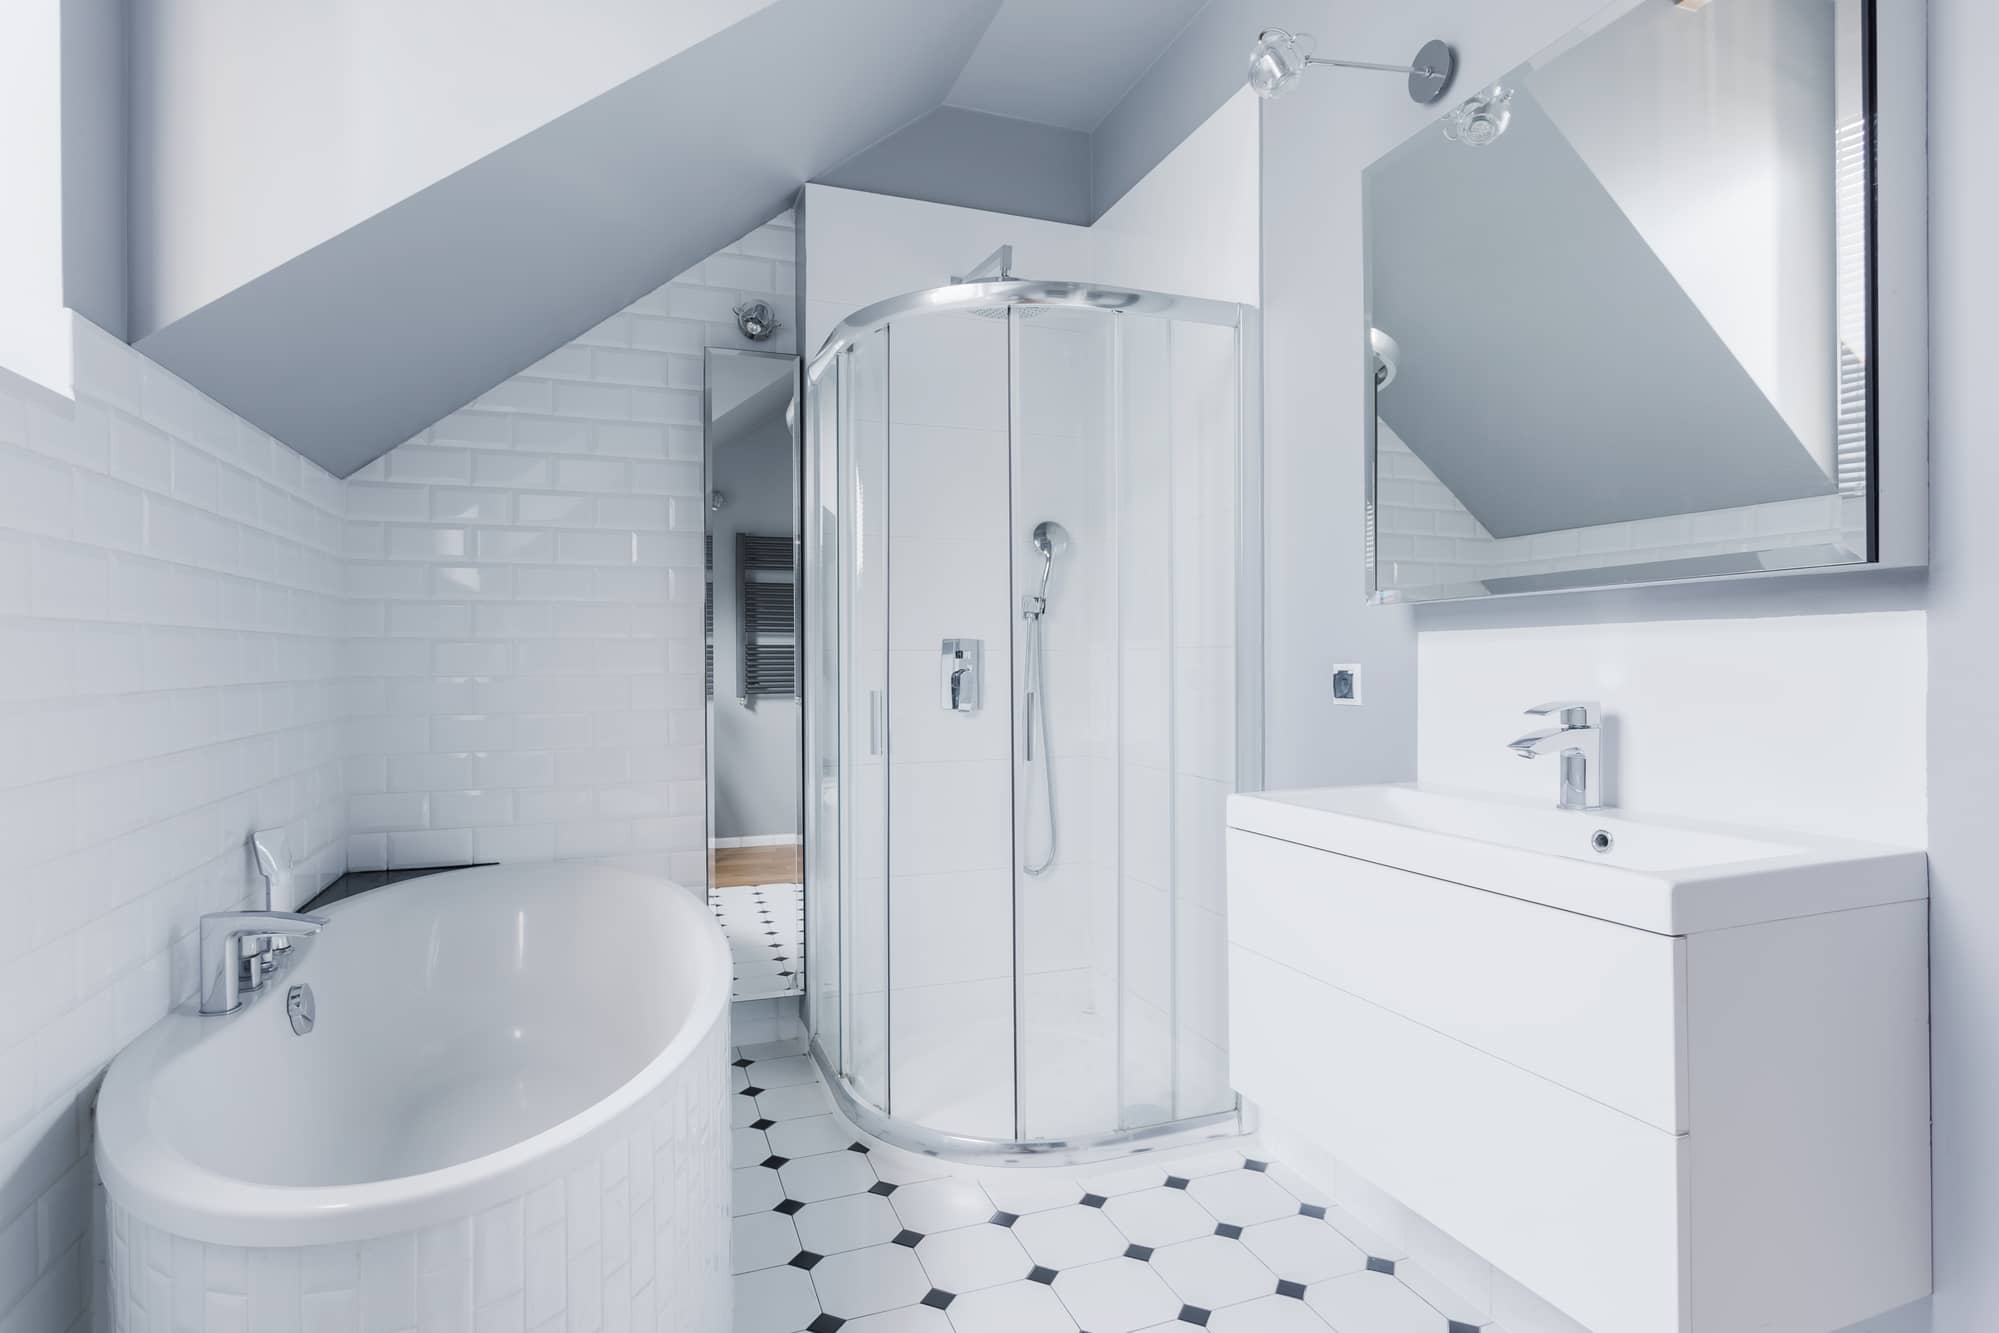 Bathroom Renovators South Africa - #1 Bathroom Renovation Services - Try...